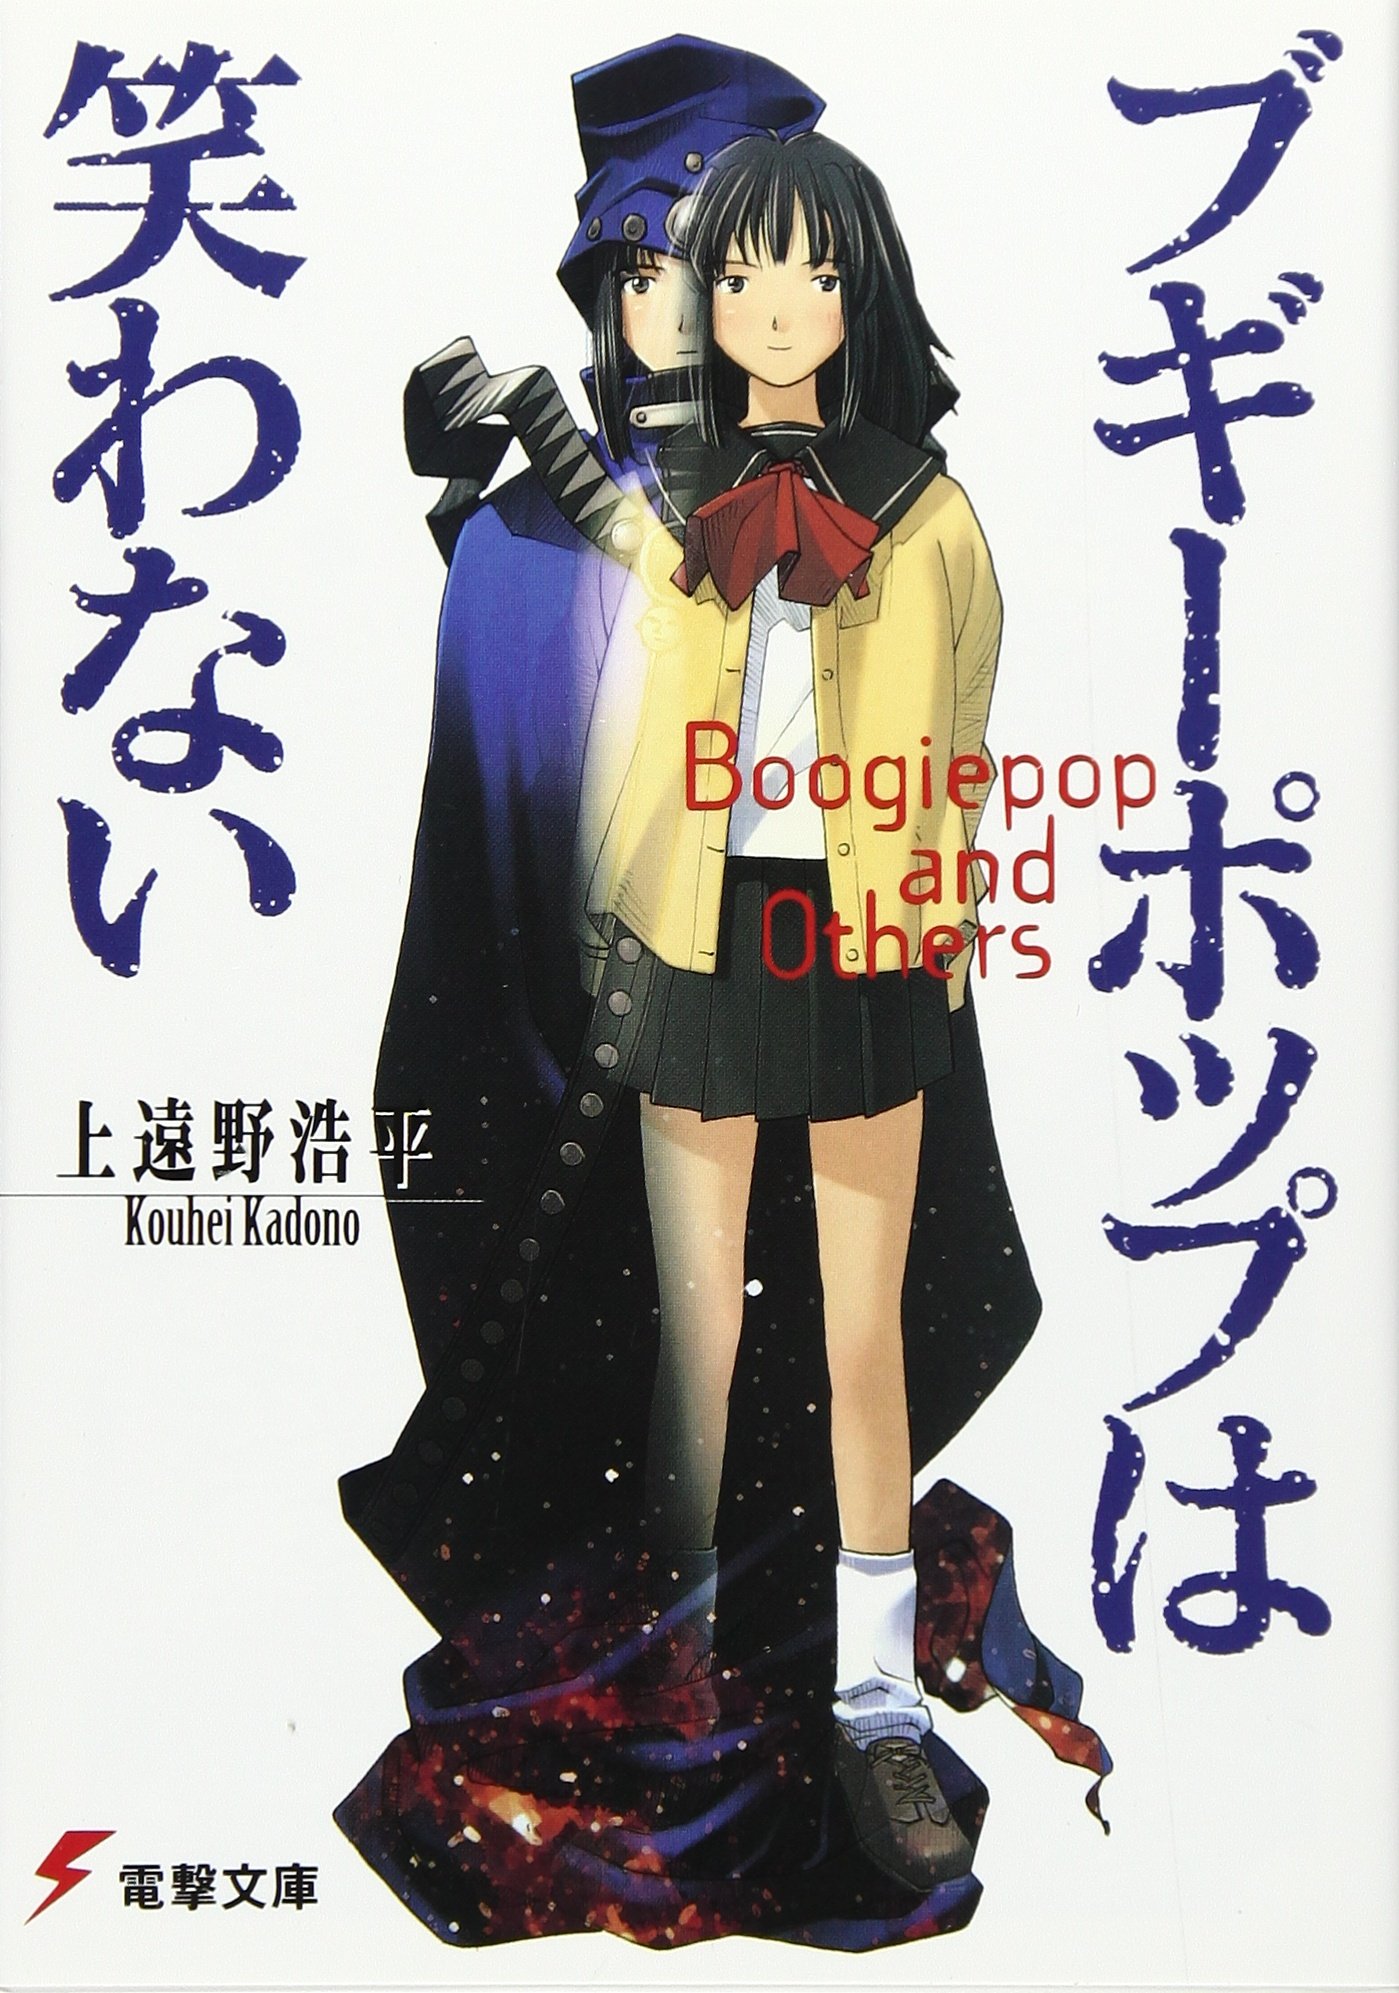 Anime Review: 'Boogiepop Phantom' (2000) - HubPages